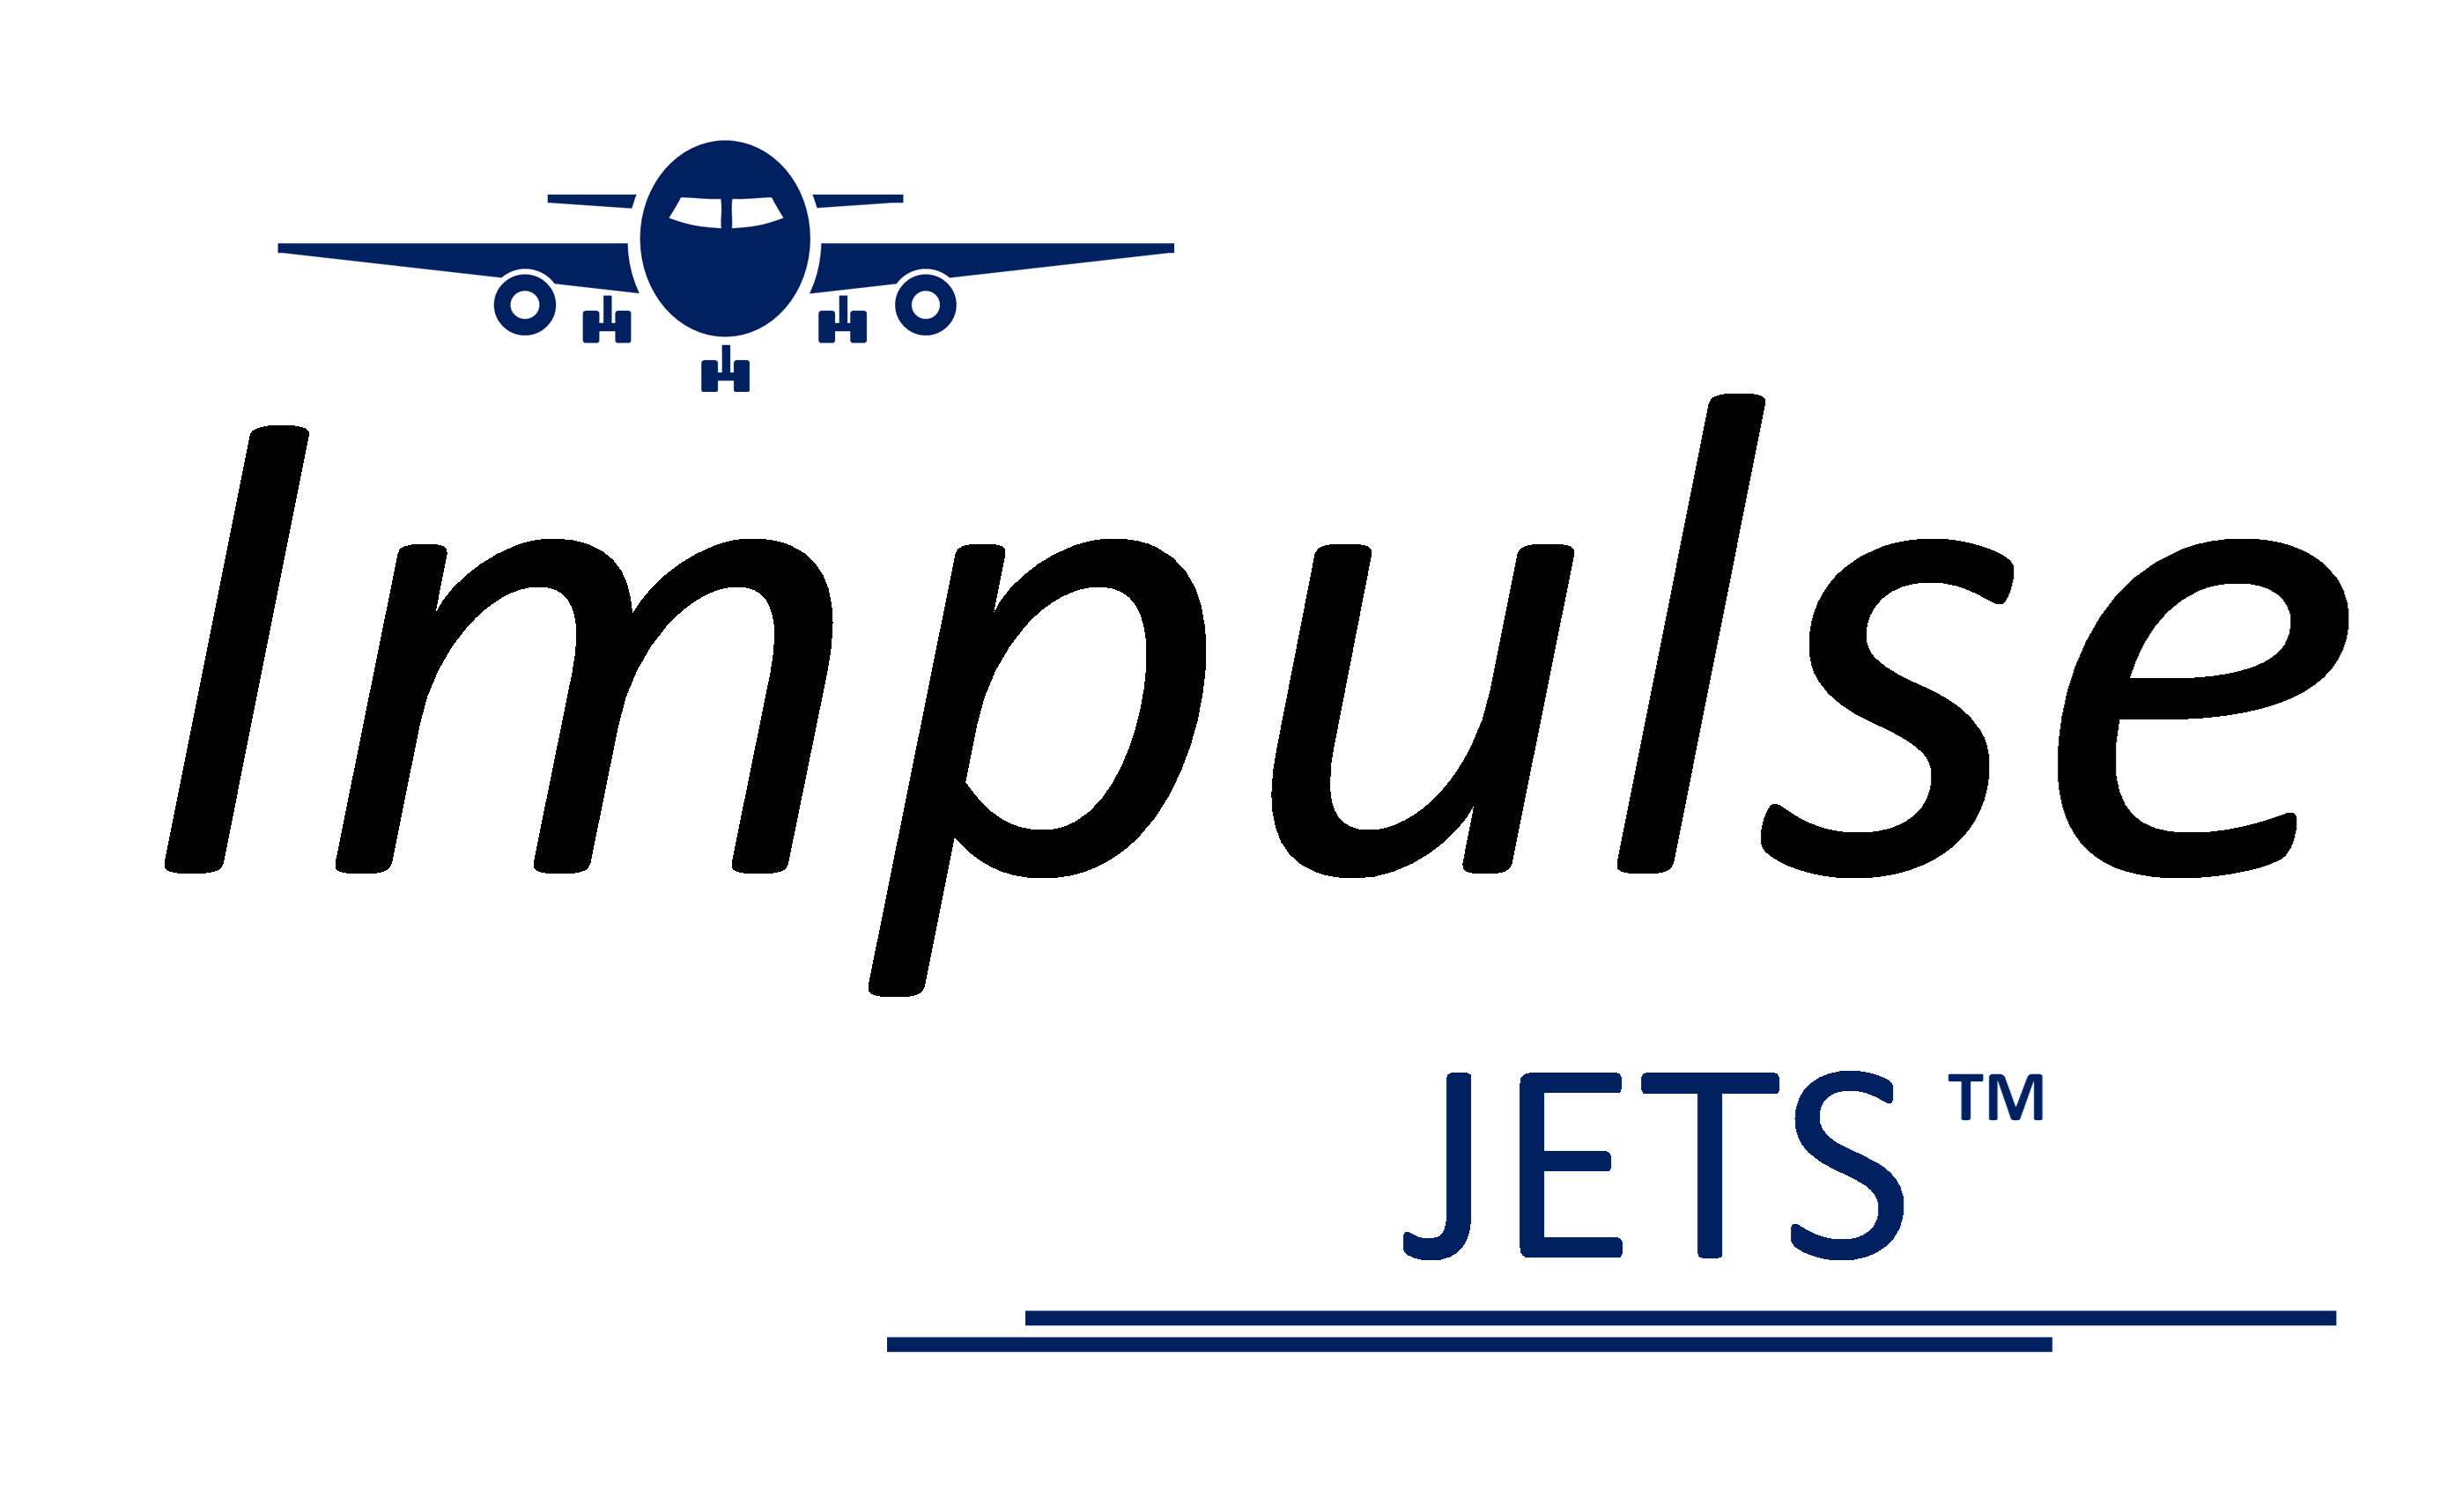 Impulse Jets